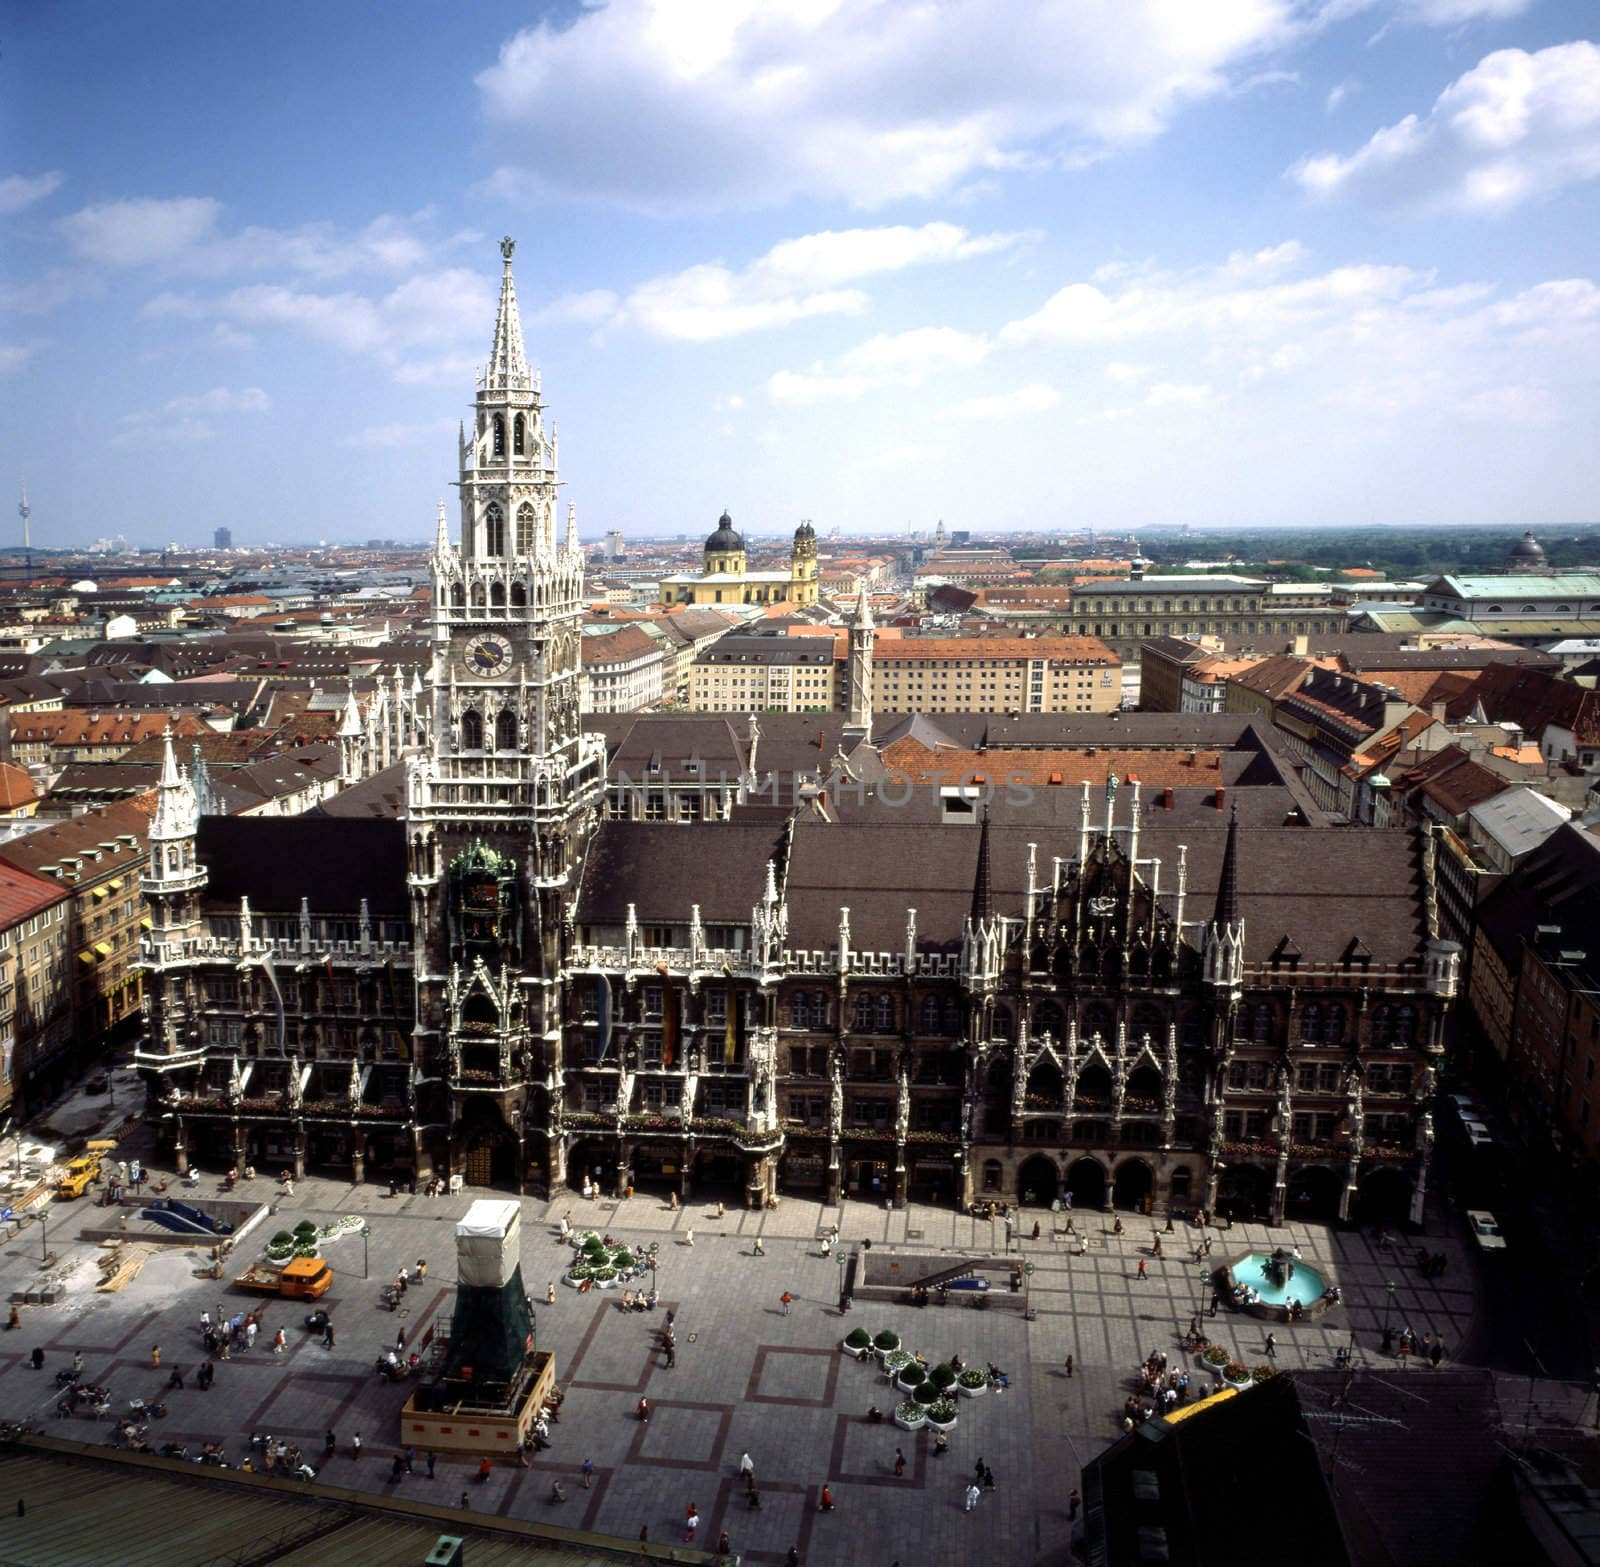 Marienplatz with a Clockspiel on Town Hall Tower and Frauenkirche